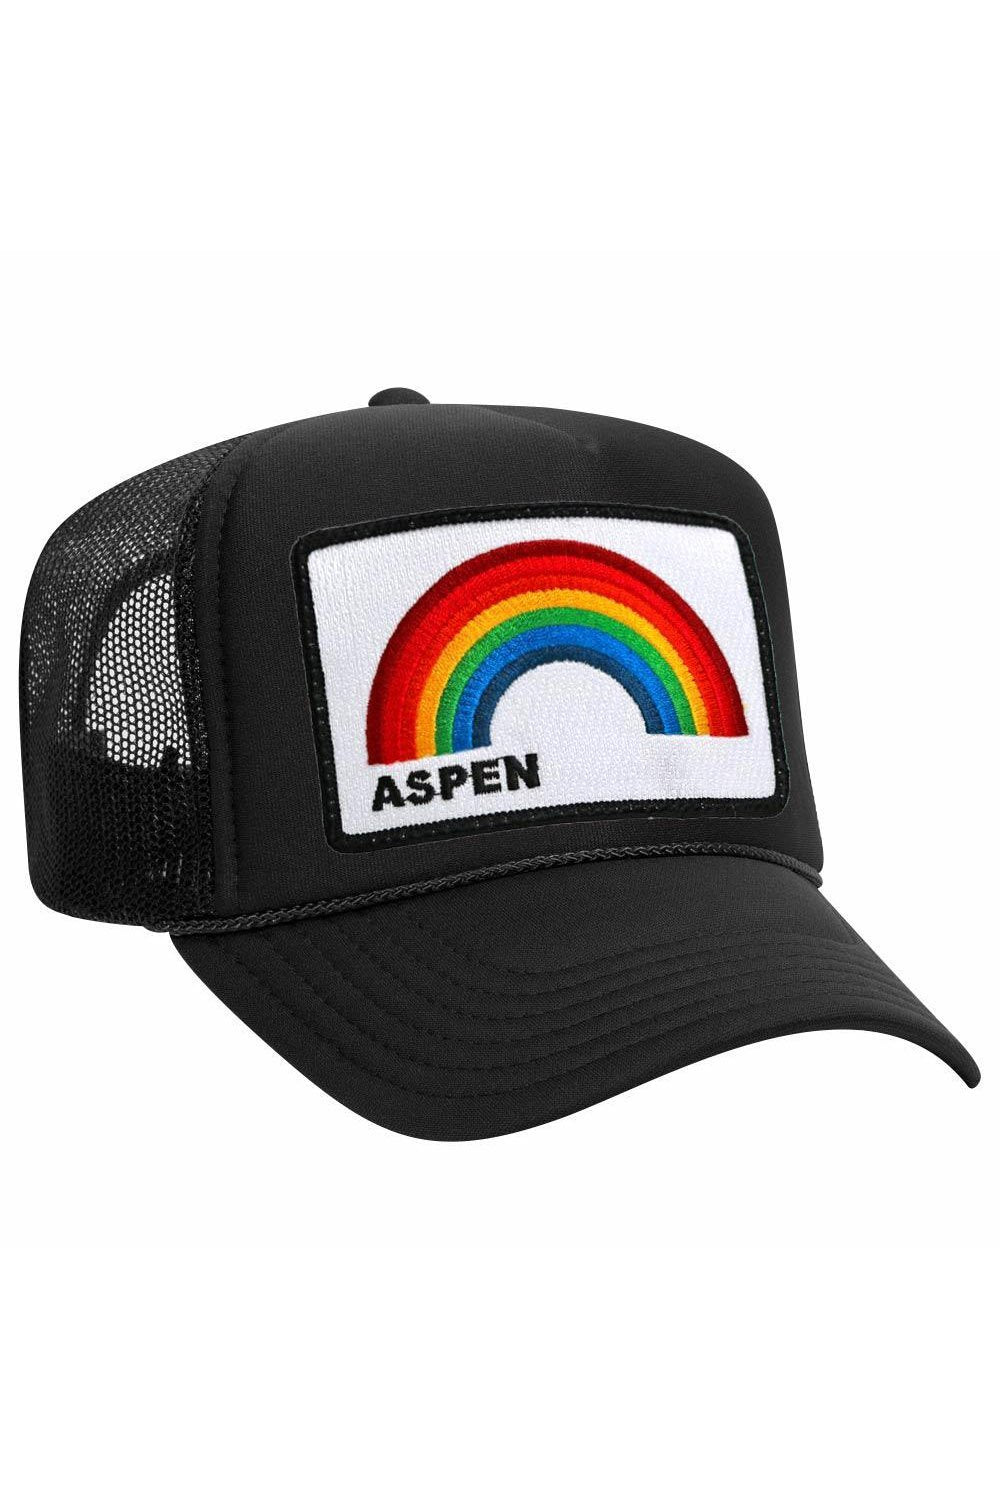 ASPEN RAINBOW TRUCKER HAT HATS Aviator Nation OS BLACK 